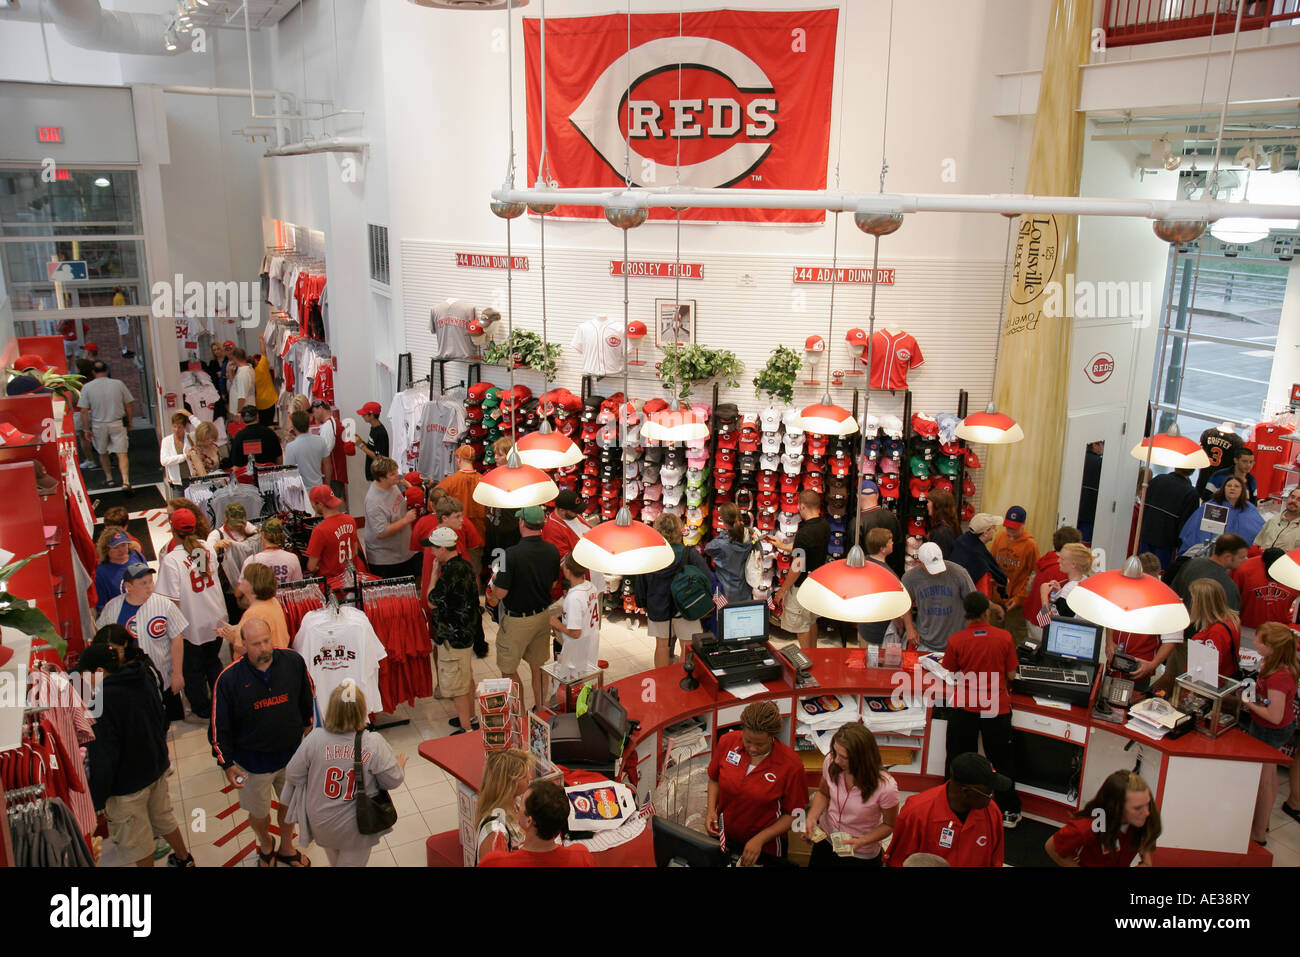 reds team store